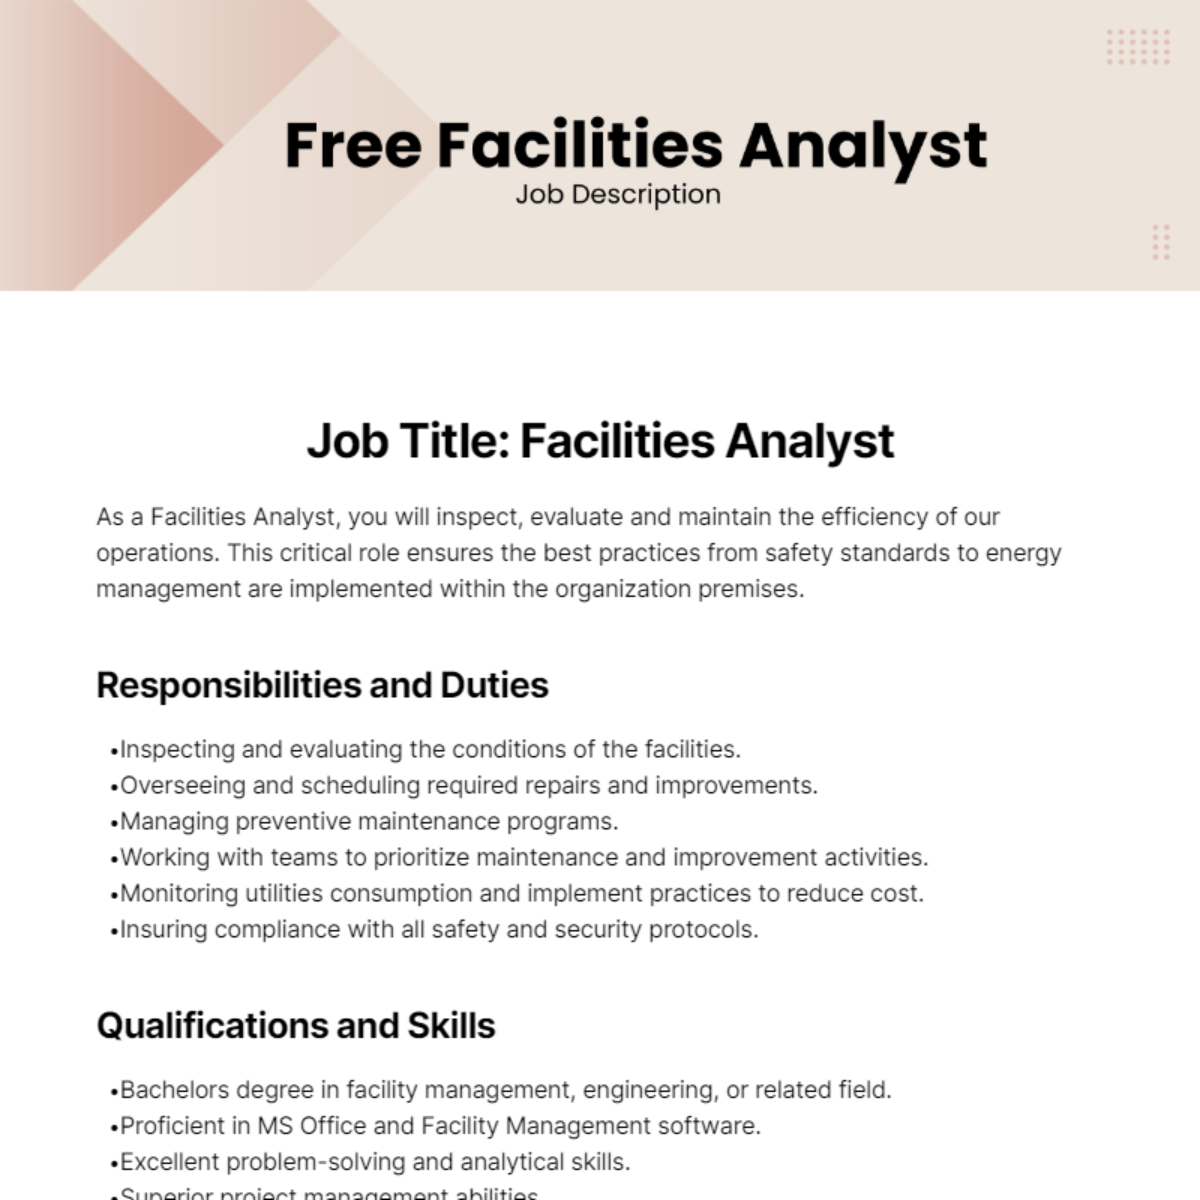 Free Facilities Analyst Job Description Template